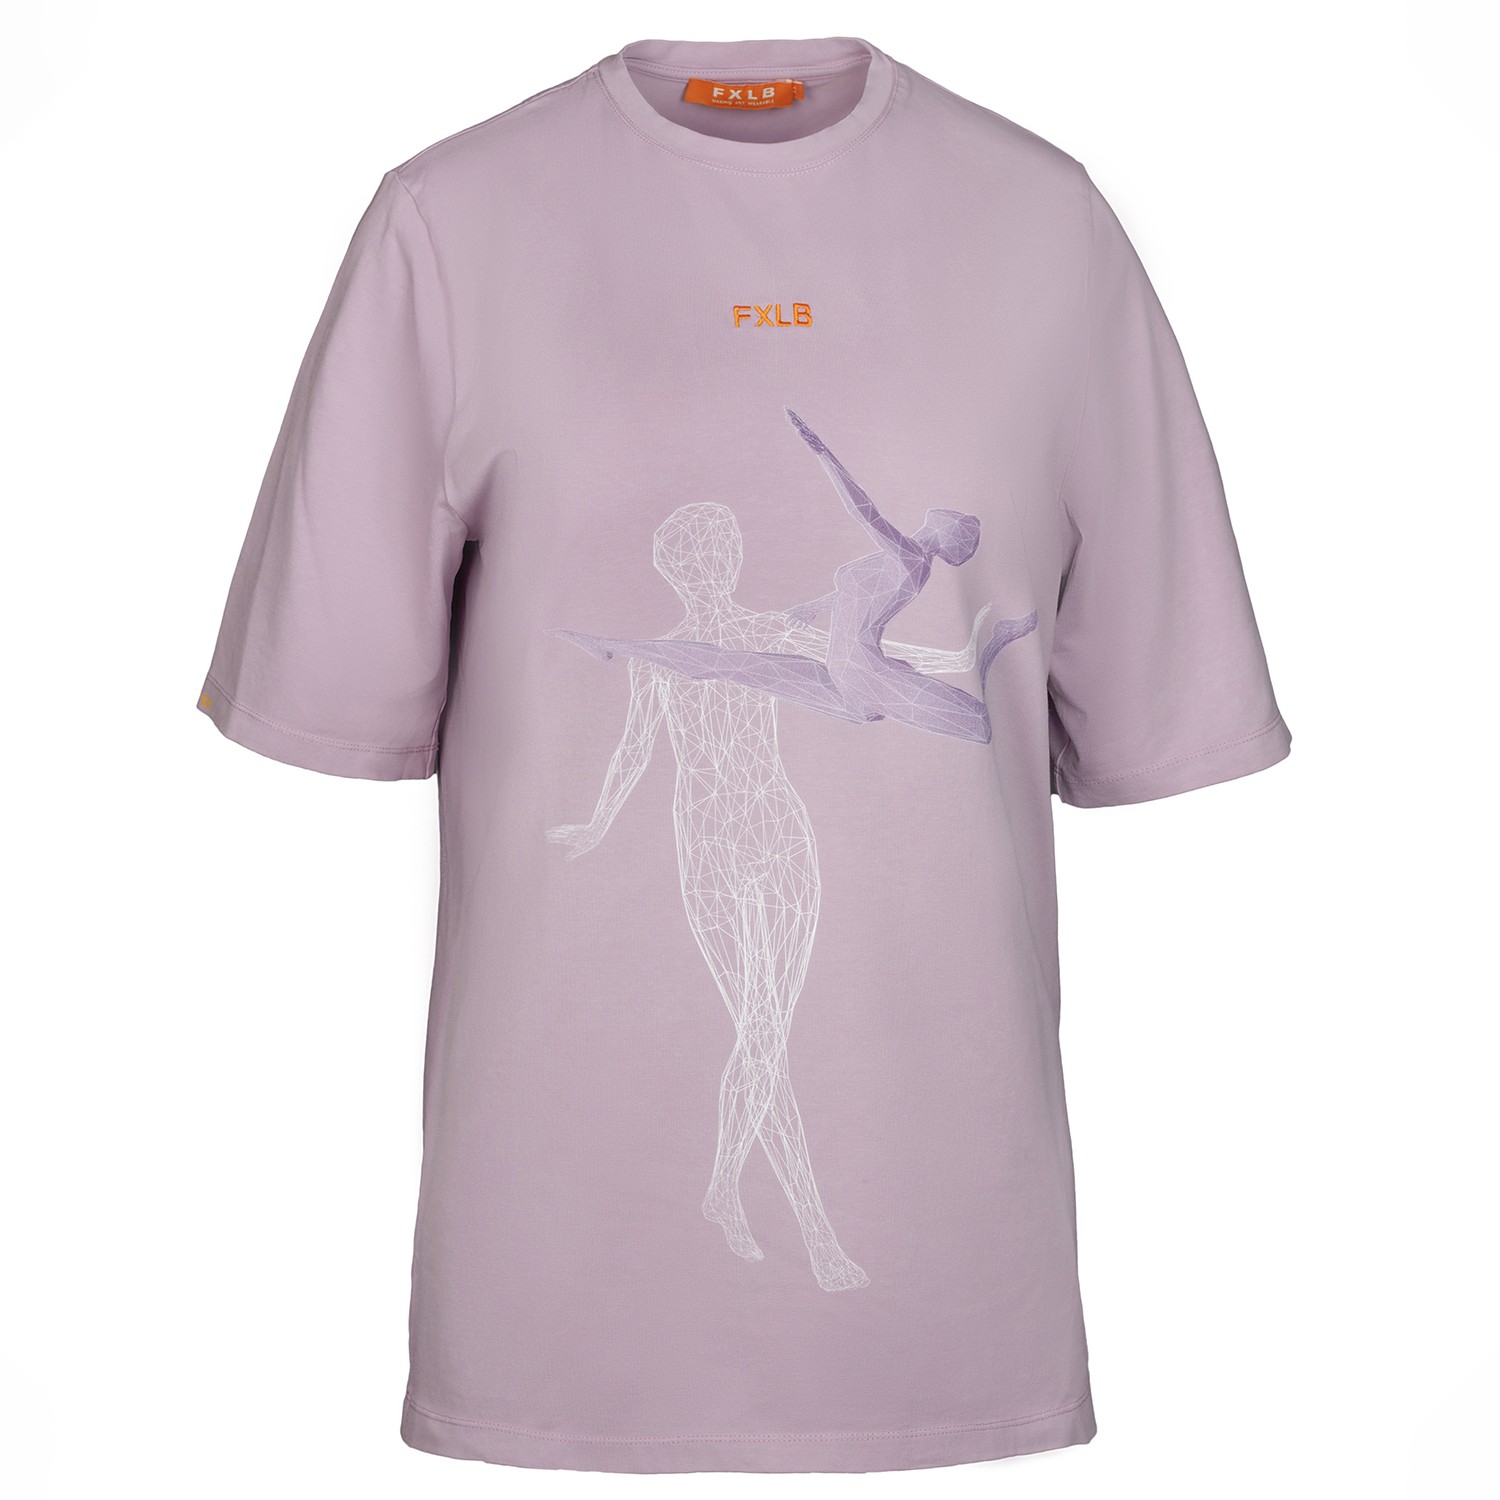 Women’s Pink / Purple Unisex Lavander T-Shirt "Beauty Is Movement" Small Foxylab New York